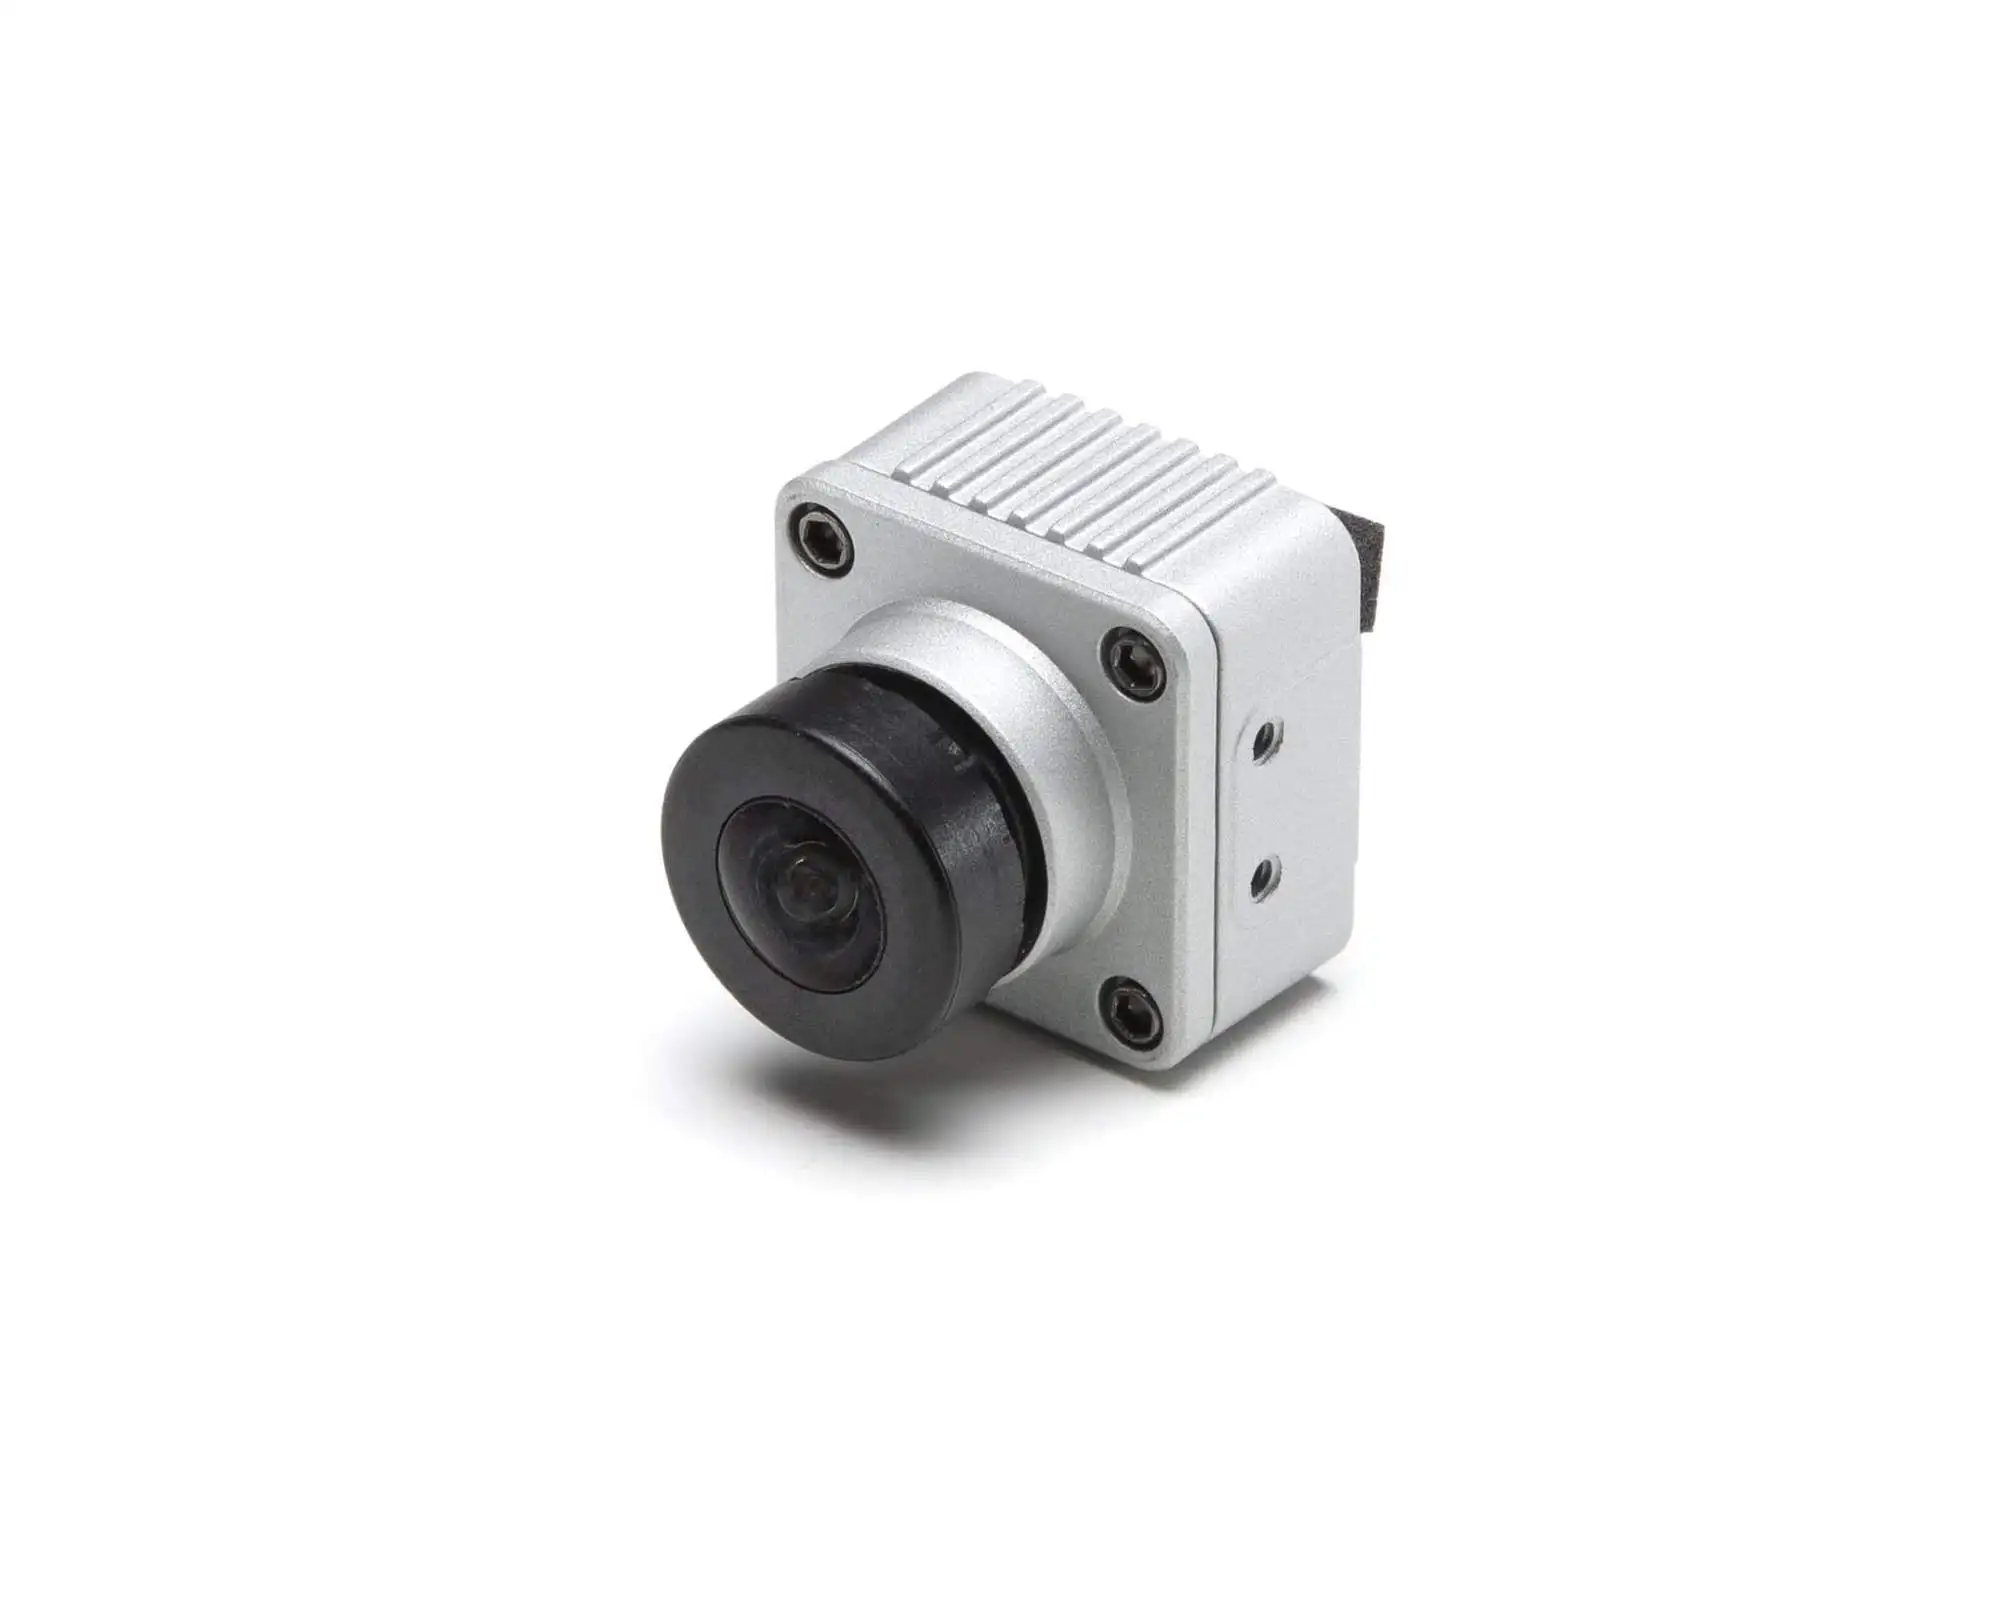 DJI FPV Camera compatible with DJI FPV Air Unit /vista kit Module A single  DJI camera modular 1/3.2'' CMOS sensor ISO 100-25600 - AliExpress